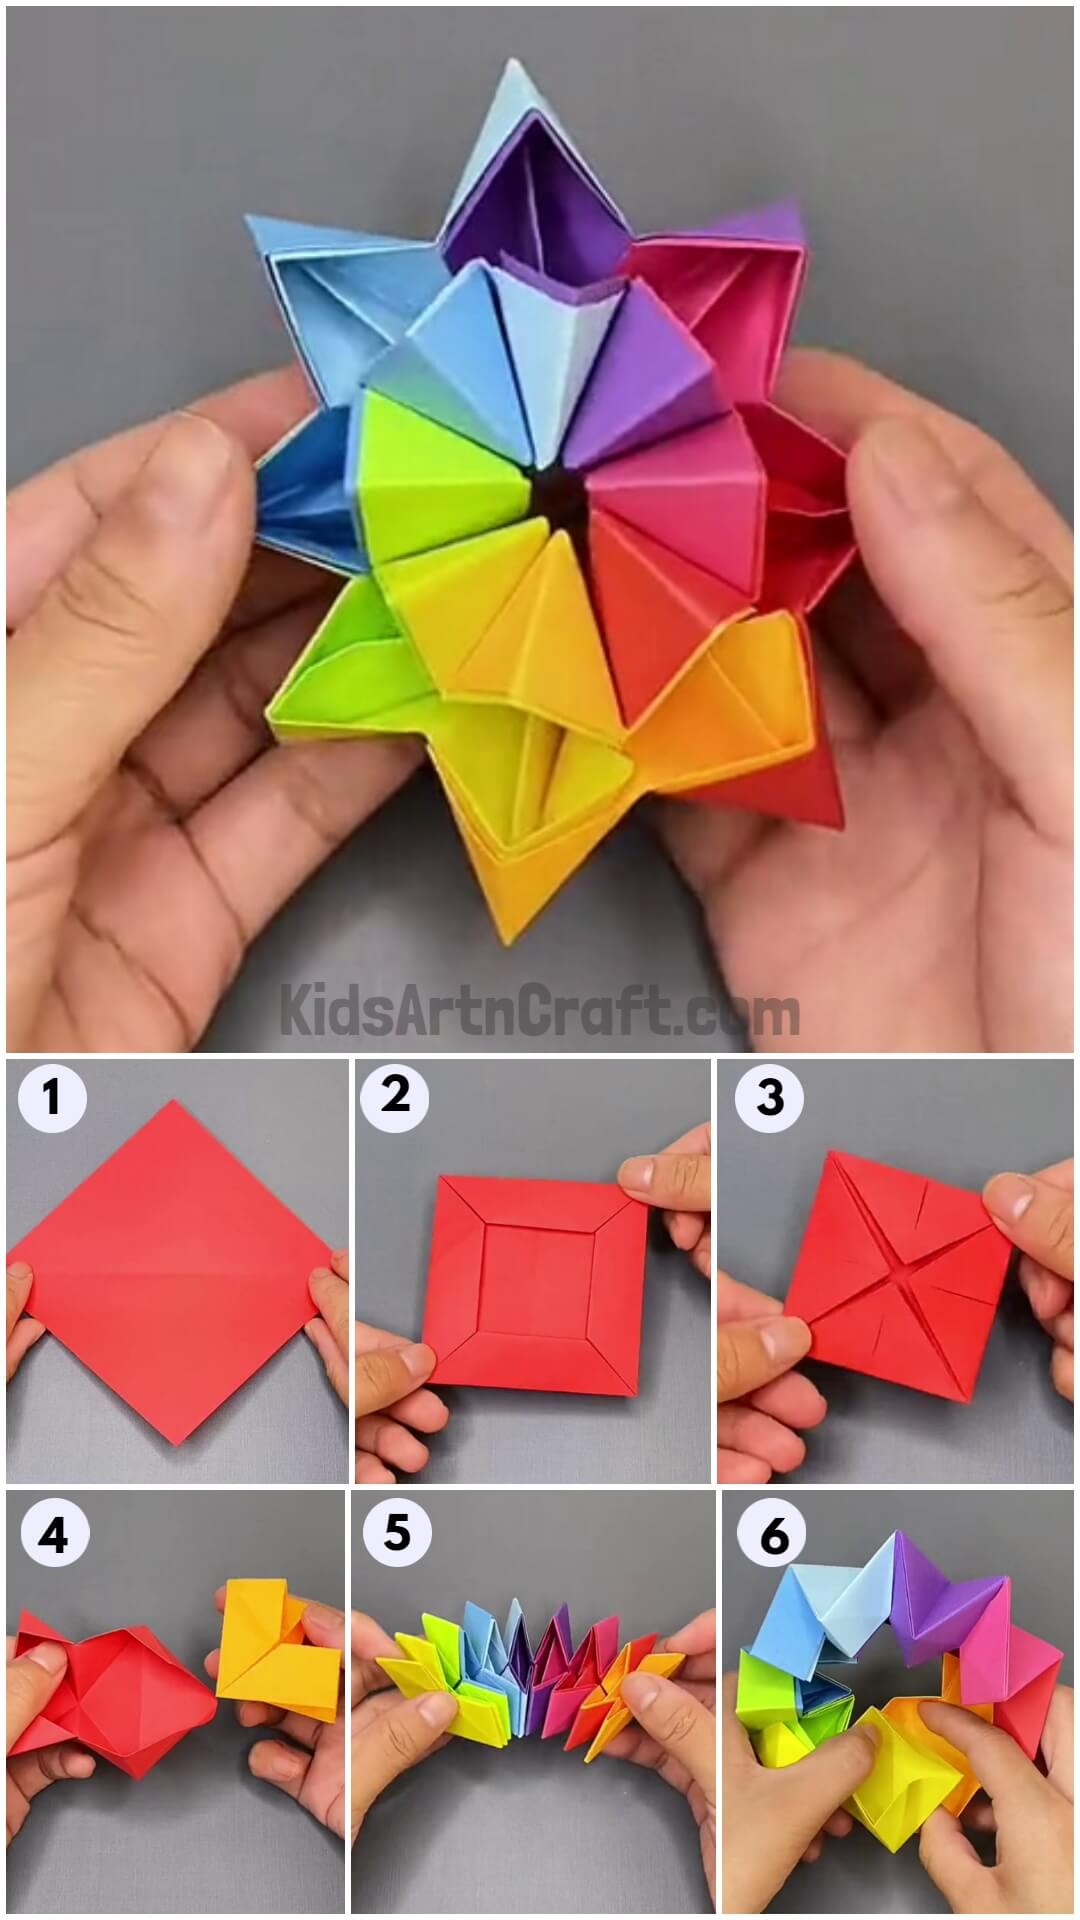  Learn to Make Origami Paper Ninja Star Craft Tutorial